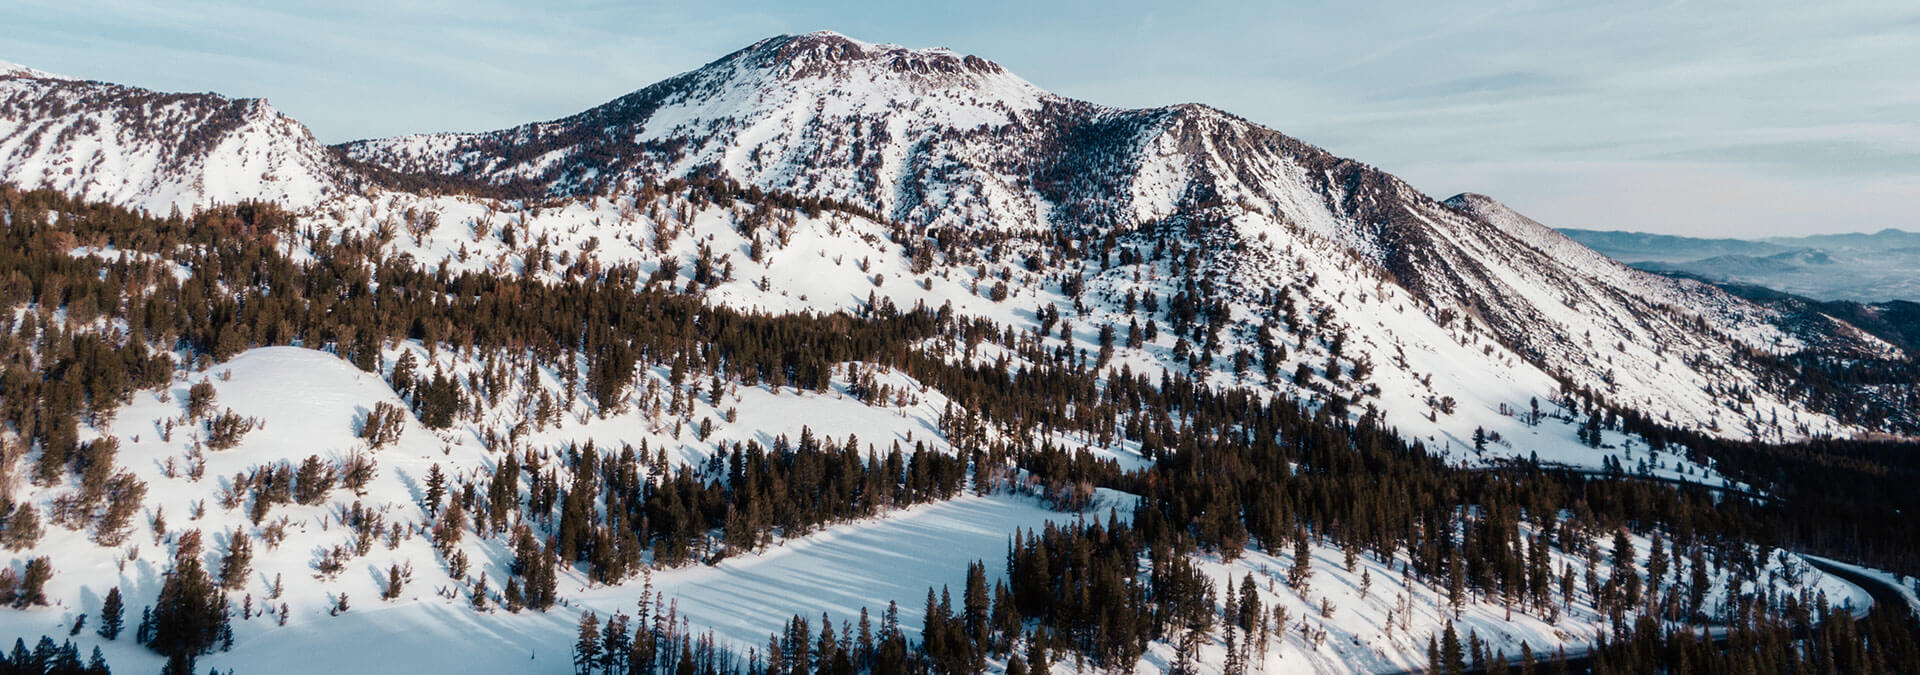 Lake Tahoe Ski Resorts Health And Safety Guidelines Reno Tahoe